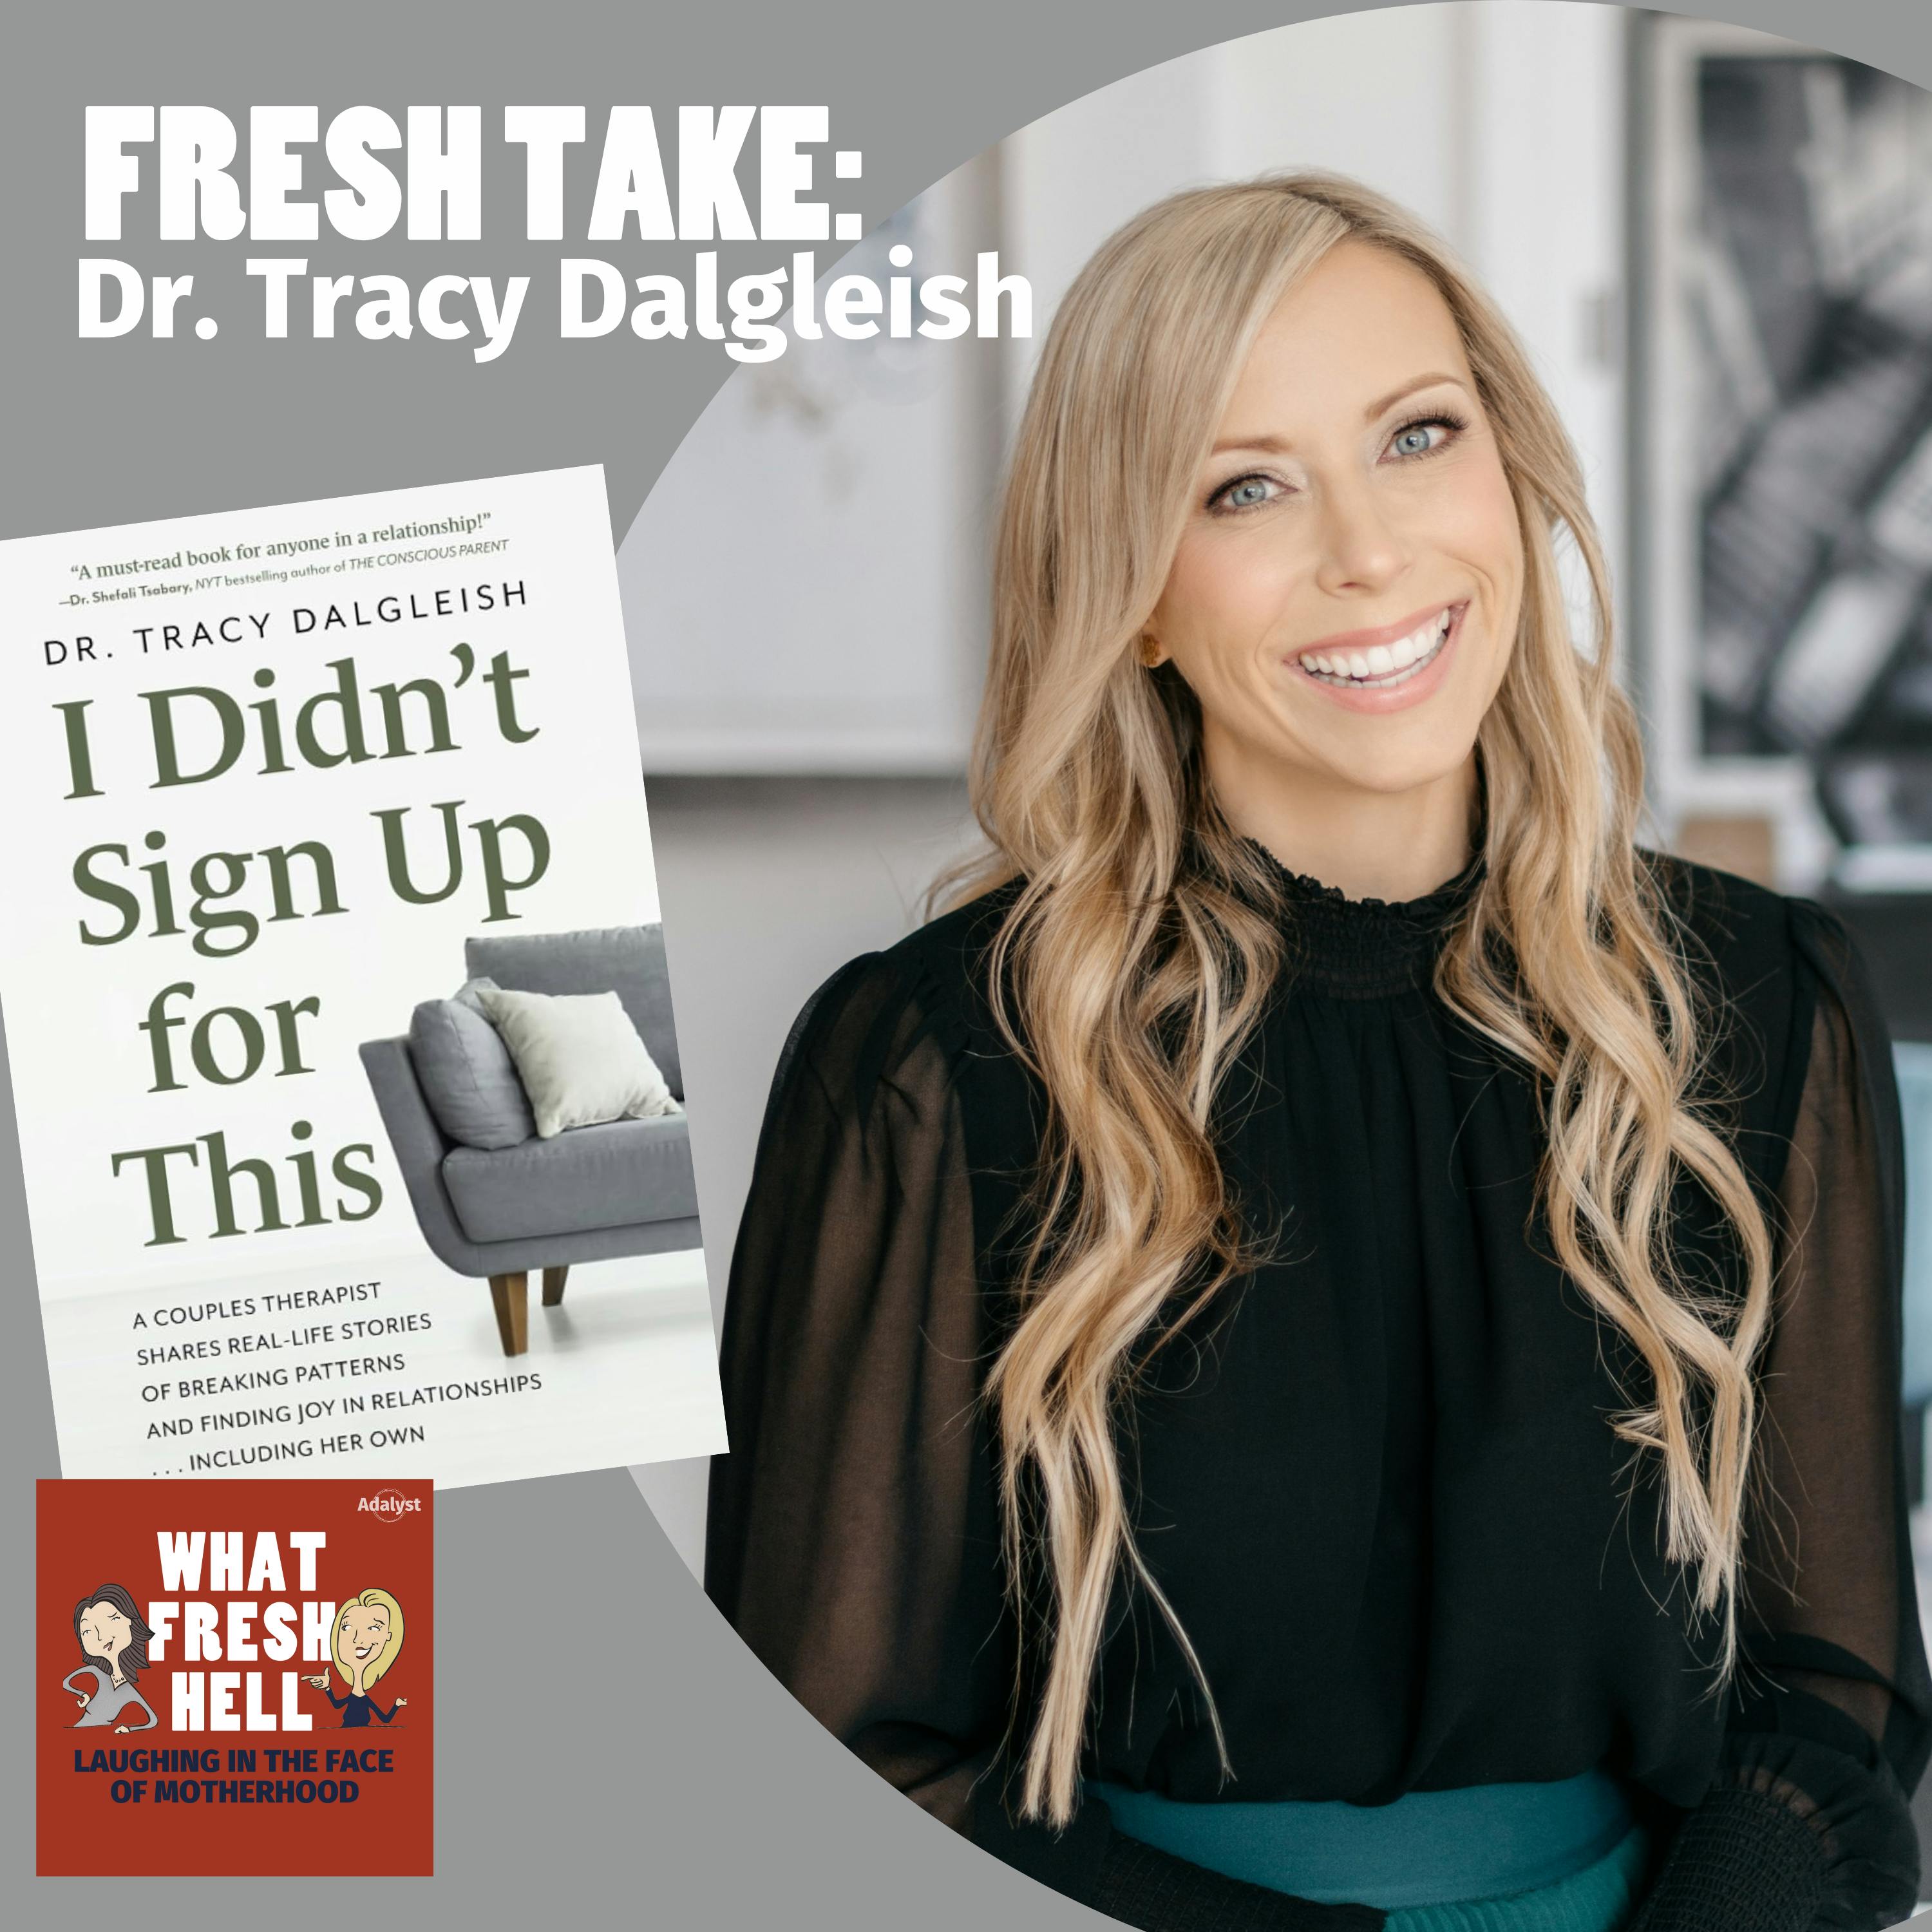 Fresh Take: Dr. Tracy Dalgleish on Making Relationships Work